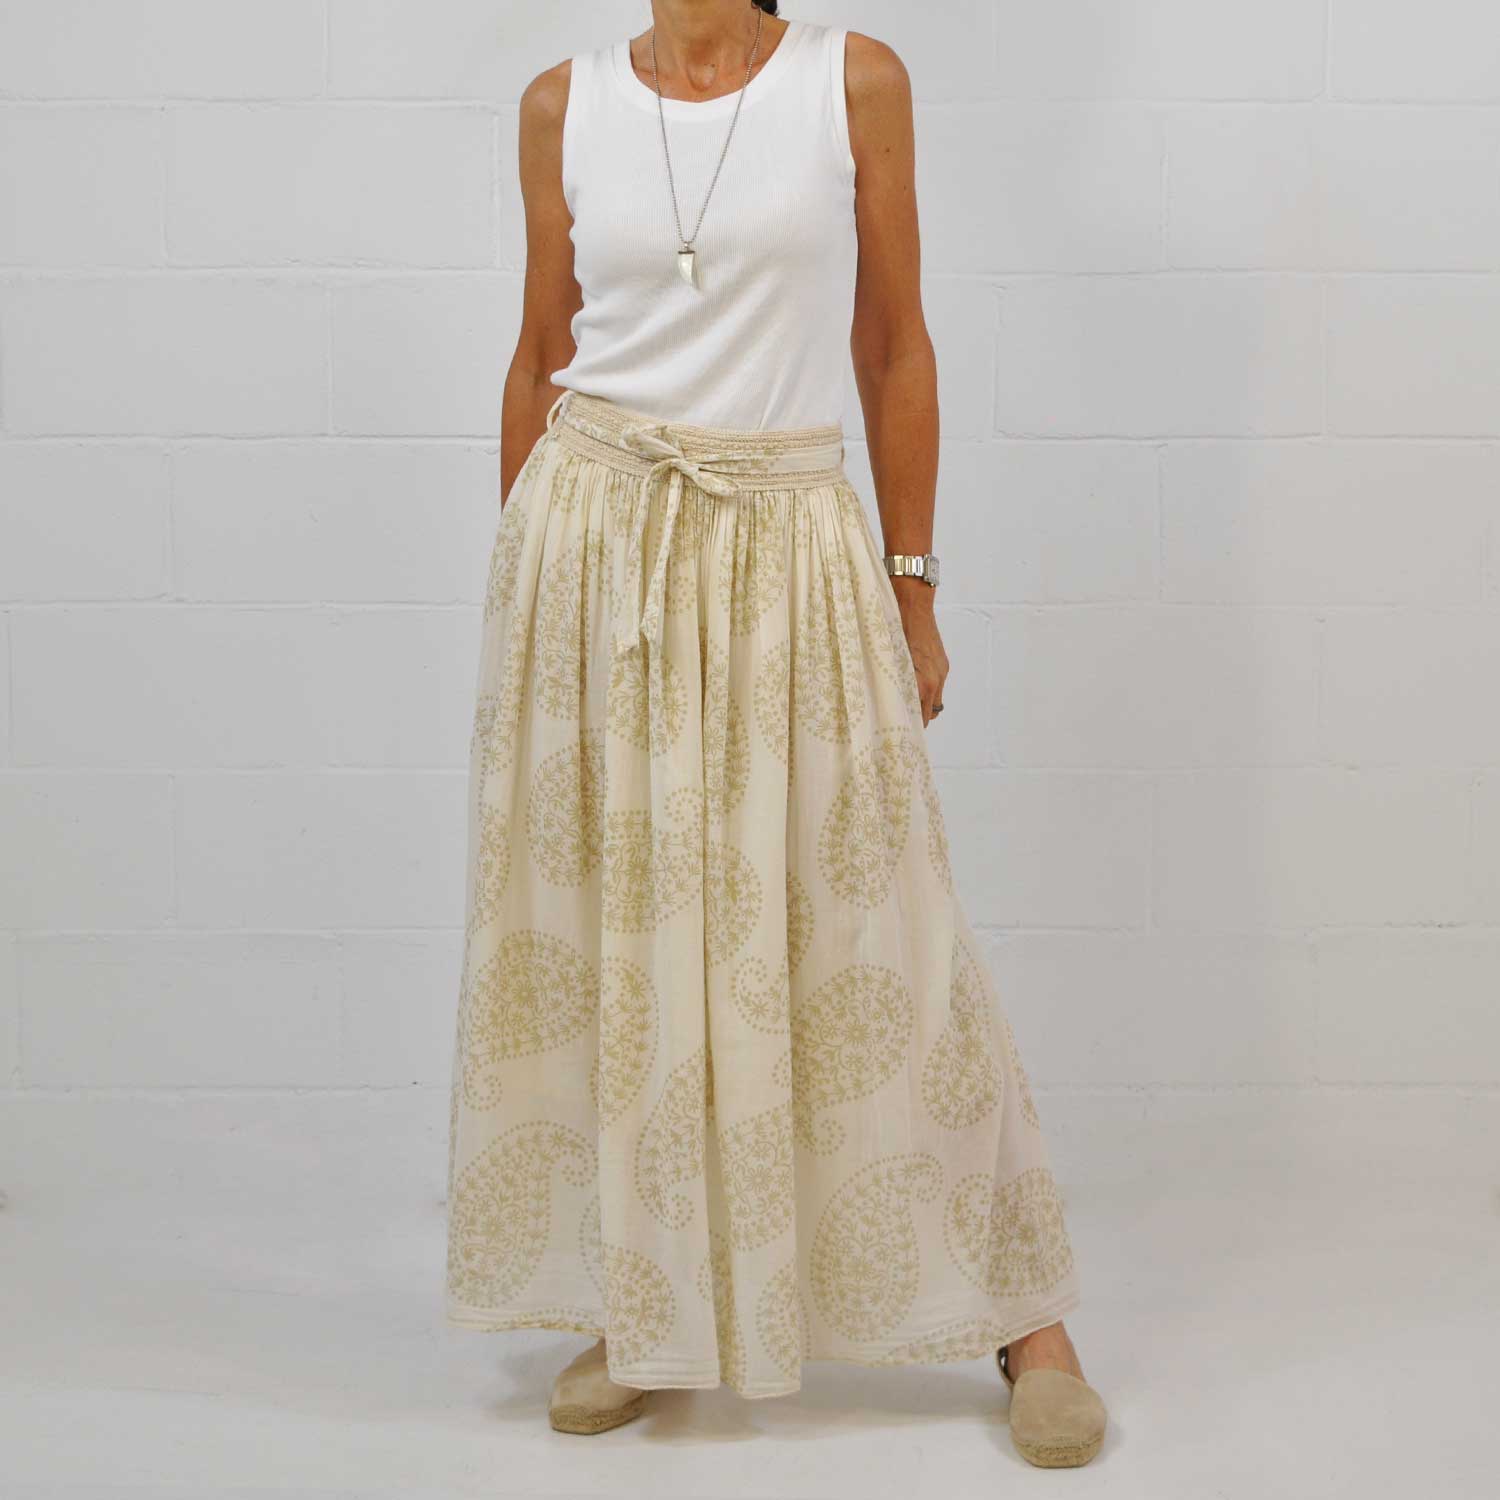 Beige printed maxi skirt